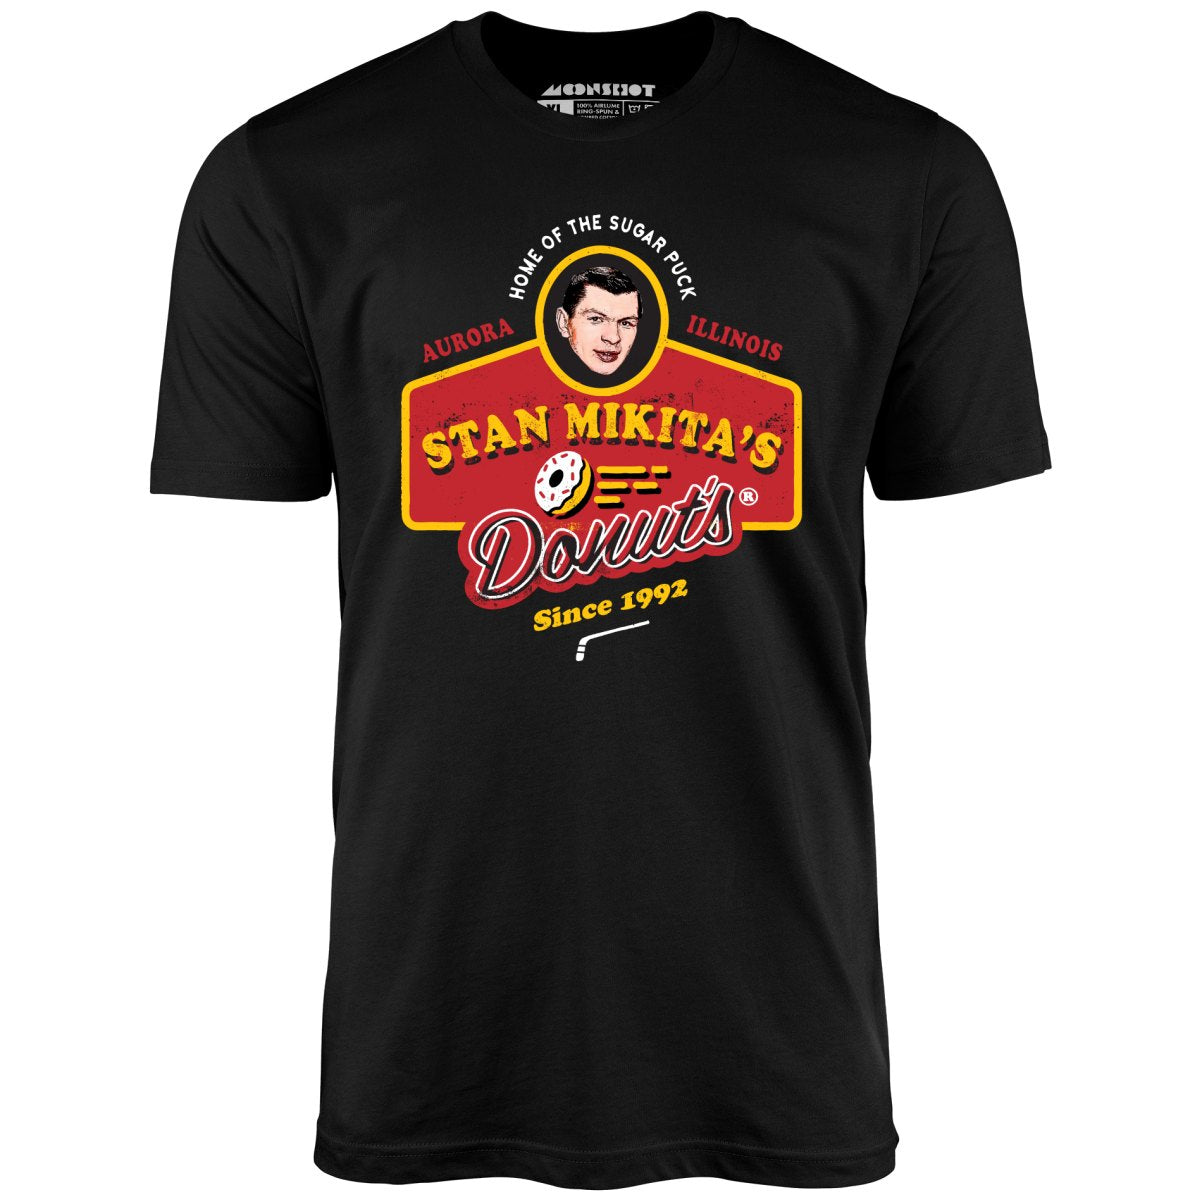 Stan Mikita's Donuts - Unisex T-Shirt